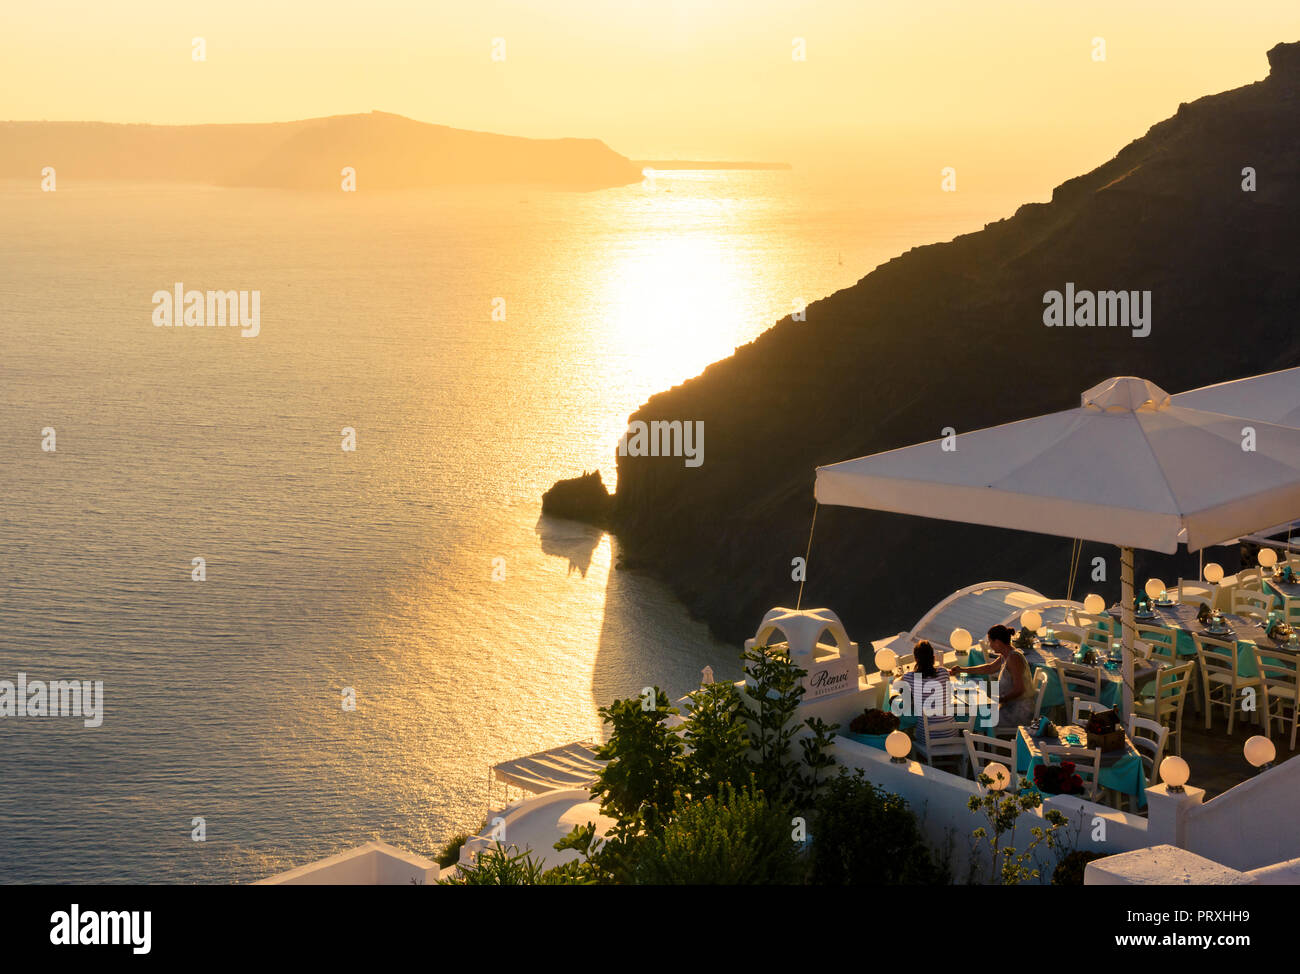 Santorini restaurant with caldera views at sunset from the cliff-side village of Imerovigli, Santorini Island, Cyclades, Greece Stock Photo